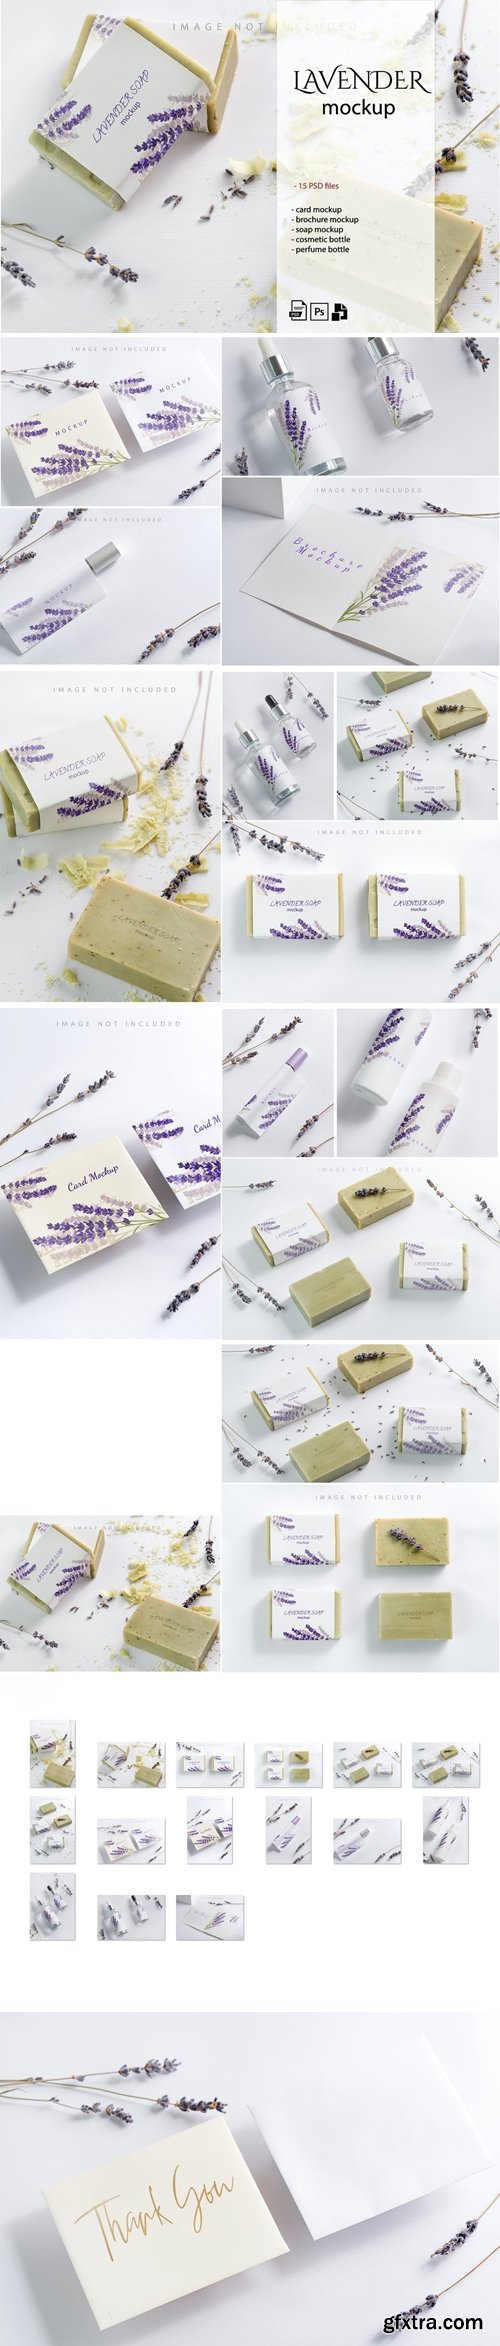 Lavender cosmetics Mockup